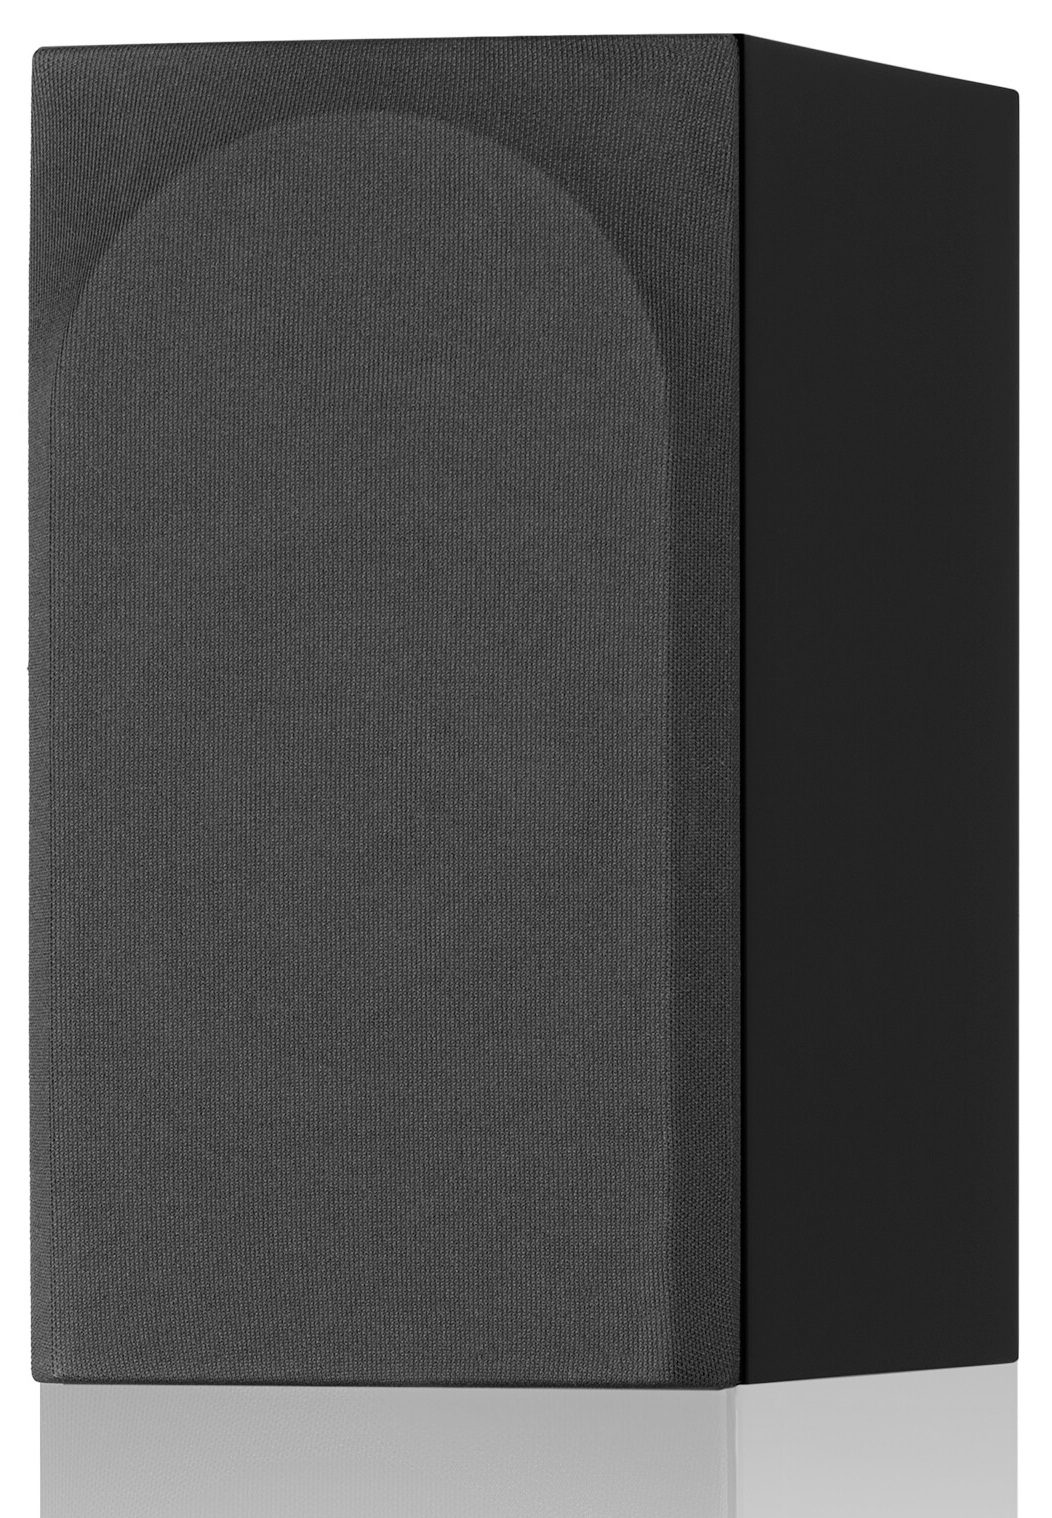 Bowers & Wilkins 707 S3 gloss black gallerij 115555